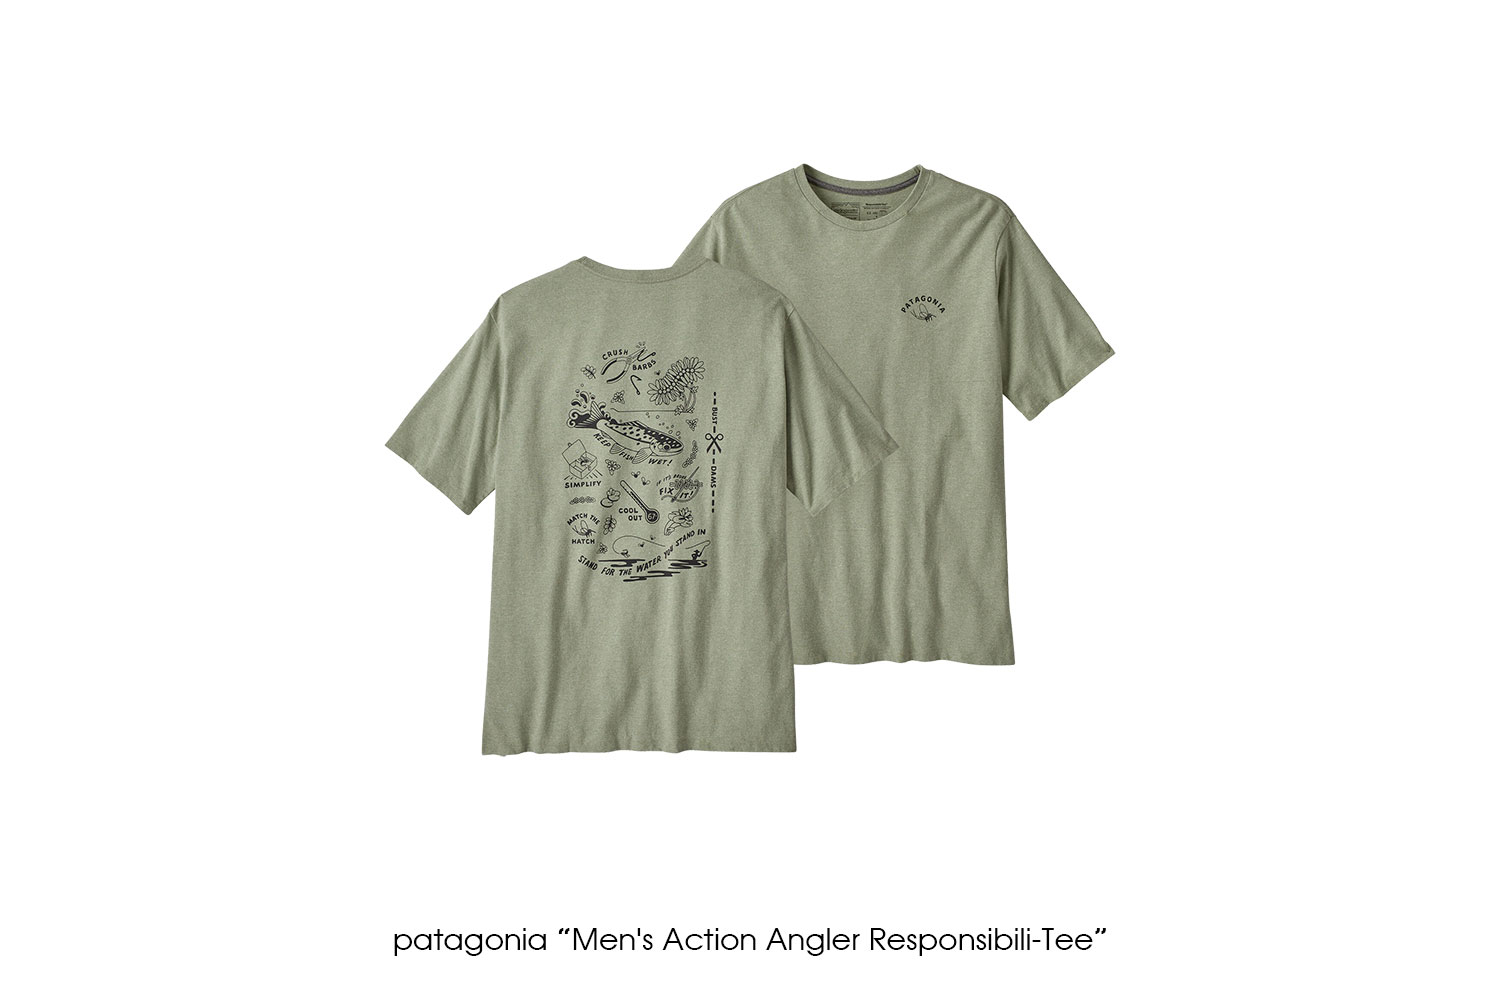 patagonia "Men's Action Angler Responsibili-Tee"